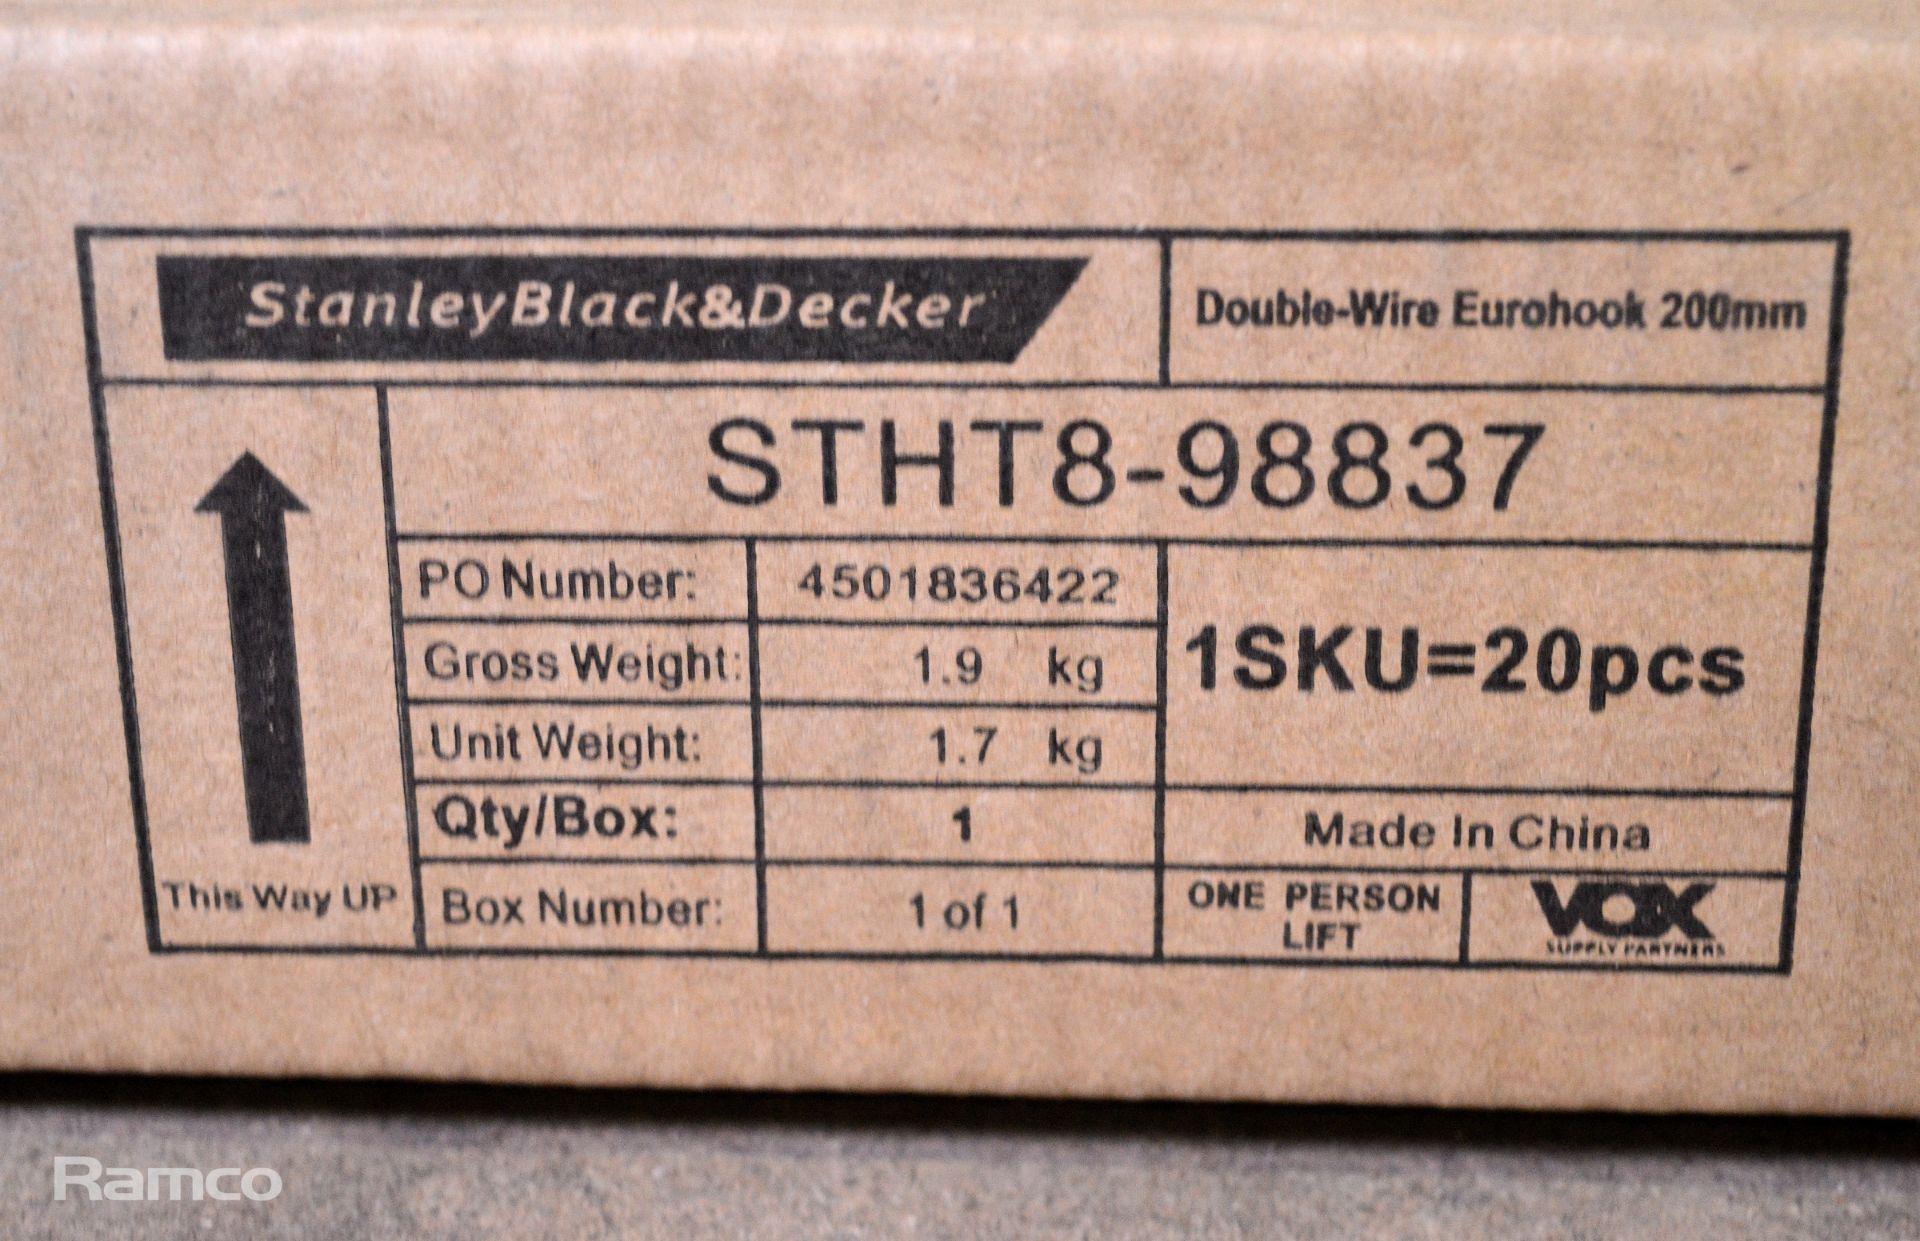 3x Stanley Black & Decker 300mm corner shelves & 2x boxes of Stanley Black & Decker double wire hook - Image 6 of 6